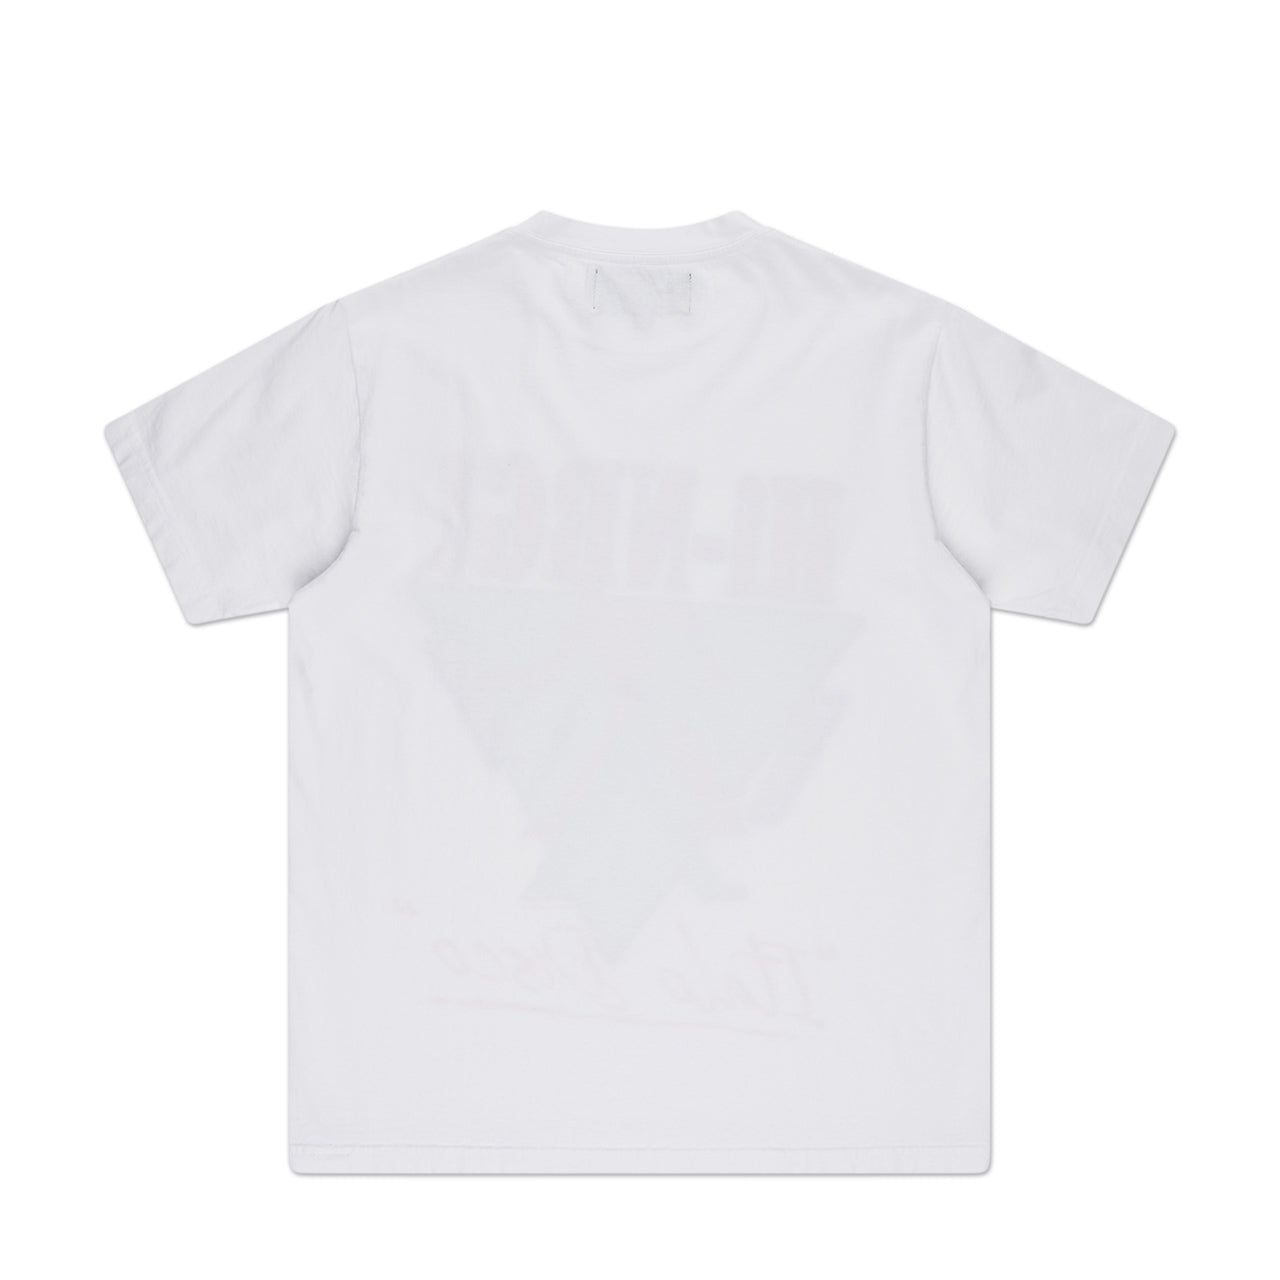 bianca chandôn hi-nrg t-shirt (white) HI-NRG-WHT - a.plus store